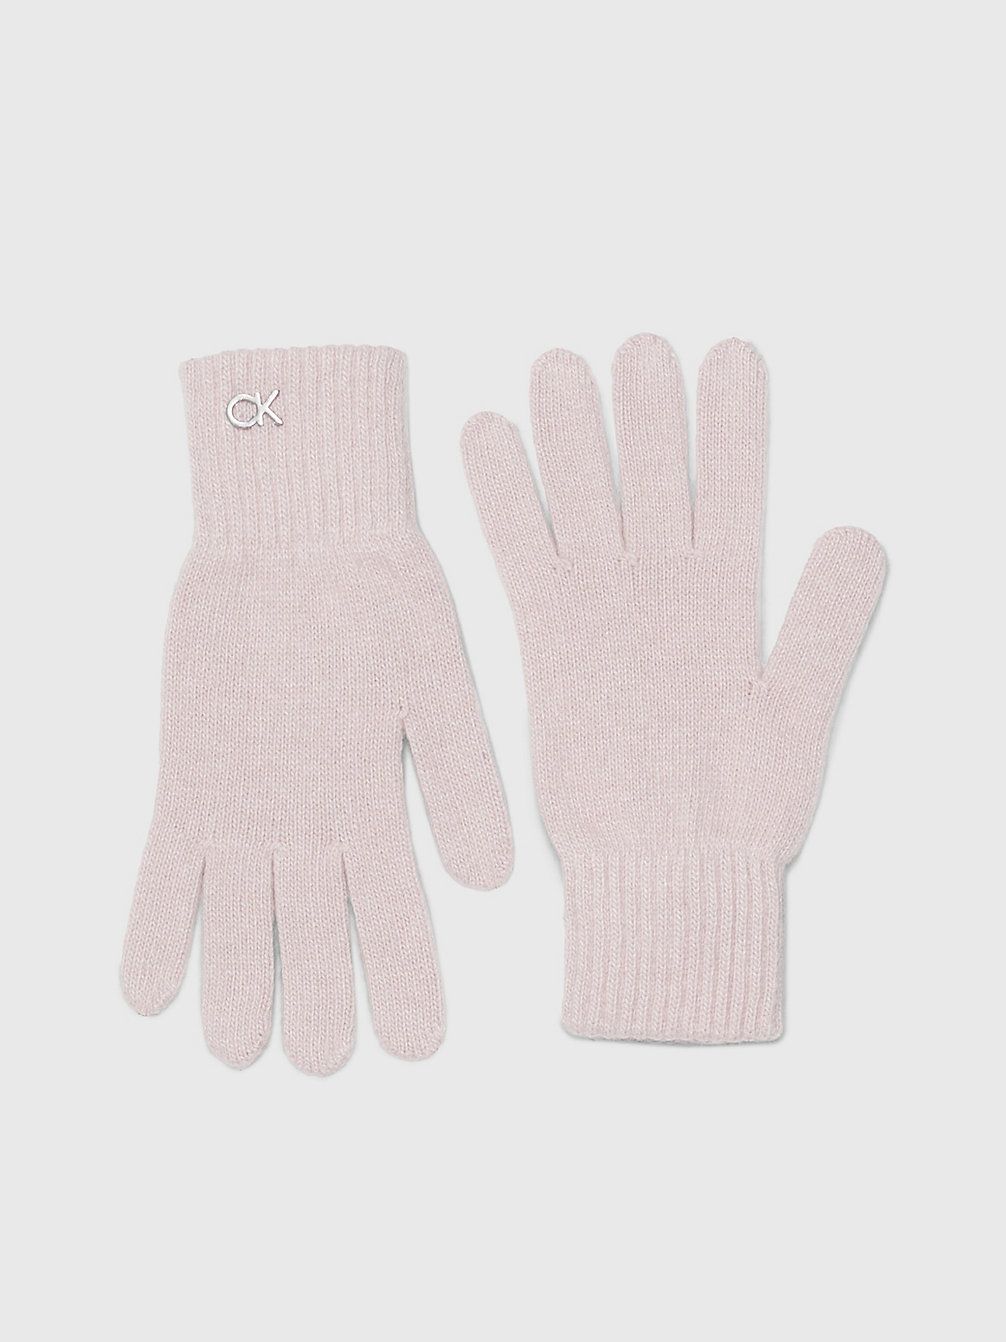 PALE MAUVE Wool Blend Gloves undefined Women Calvin Klein